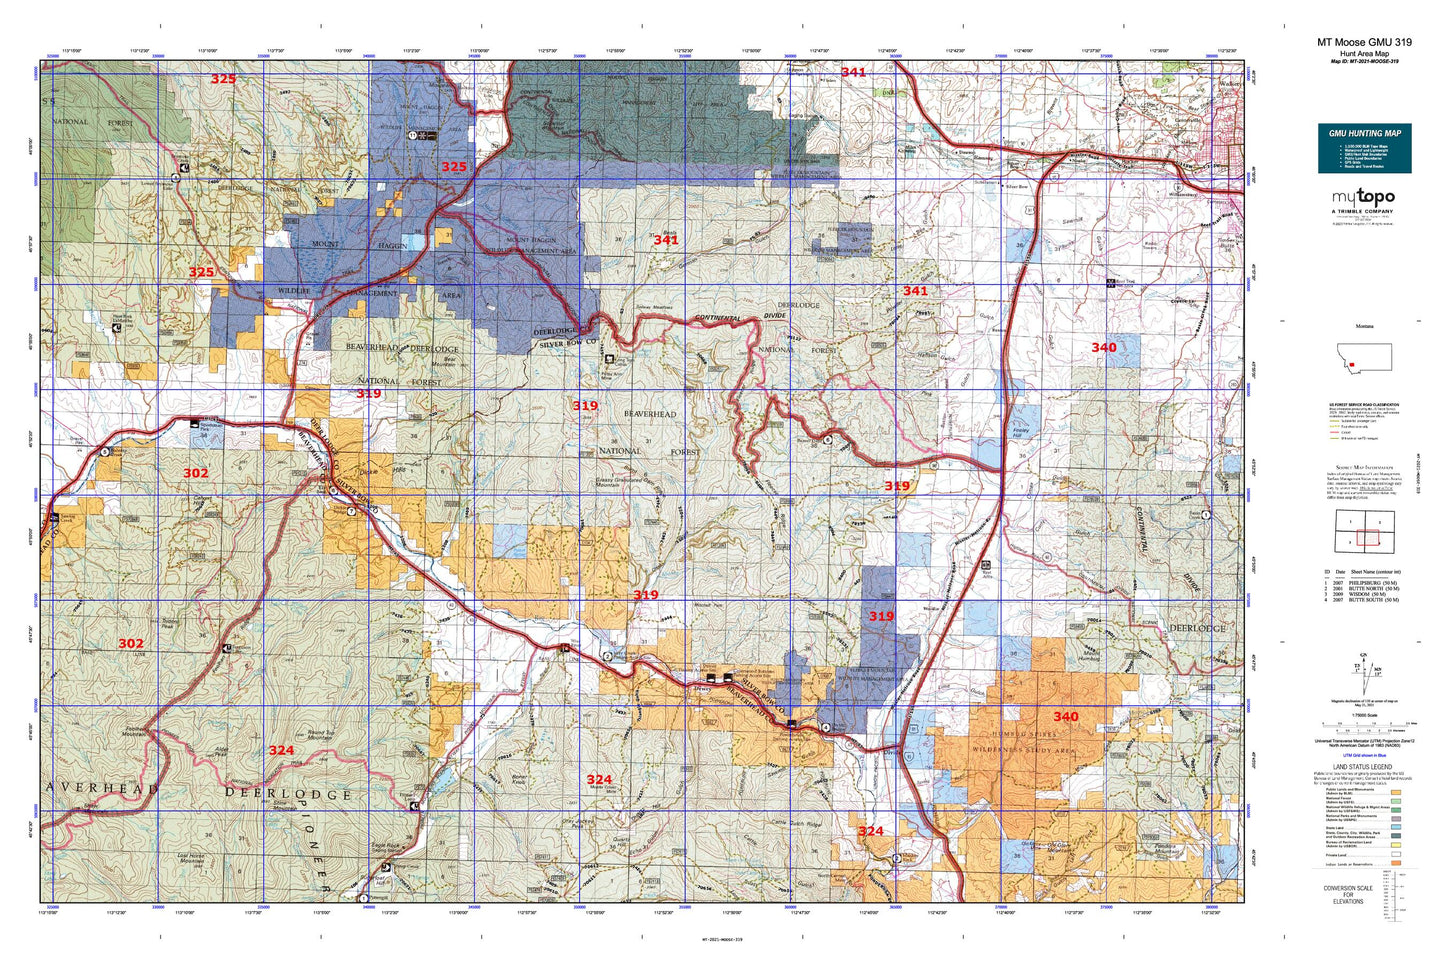 Montana Moose GMU 319 Map Image